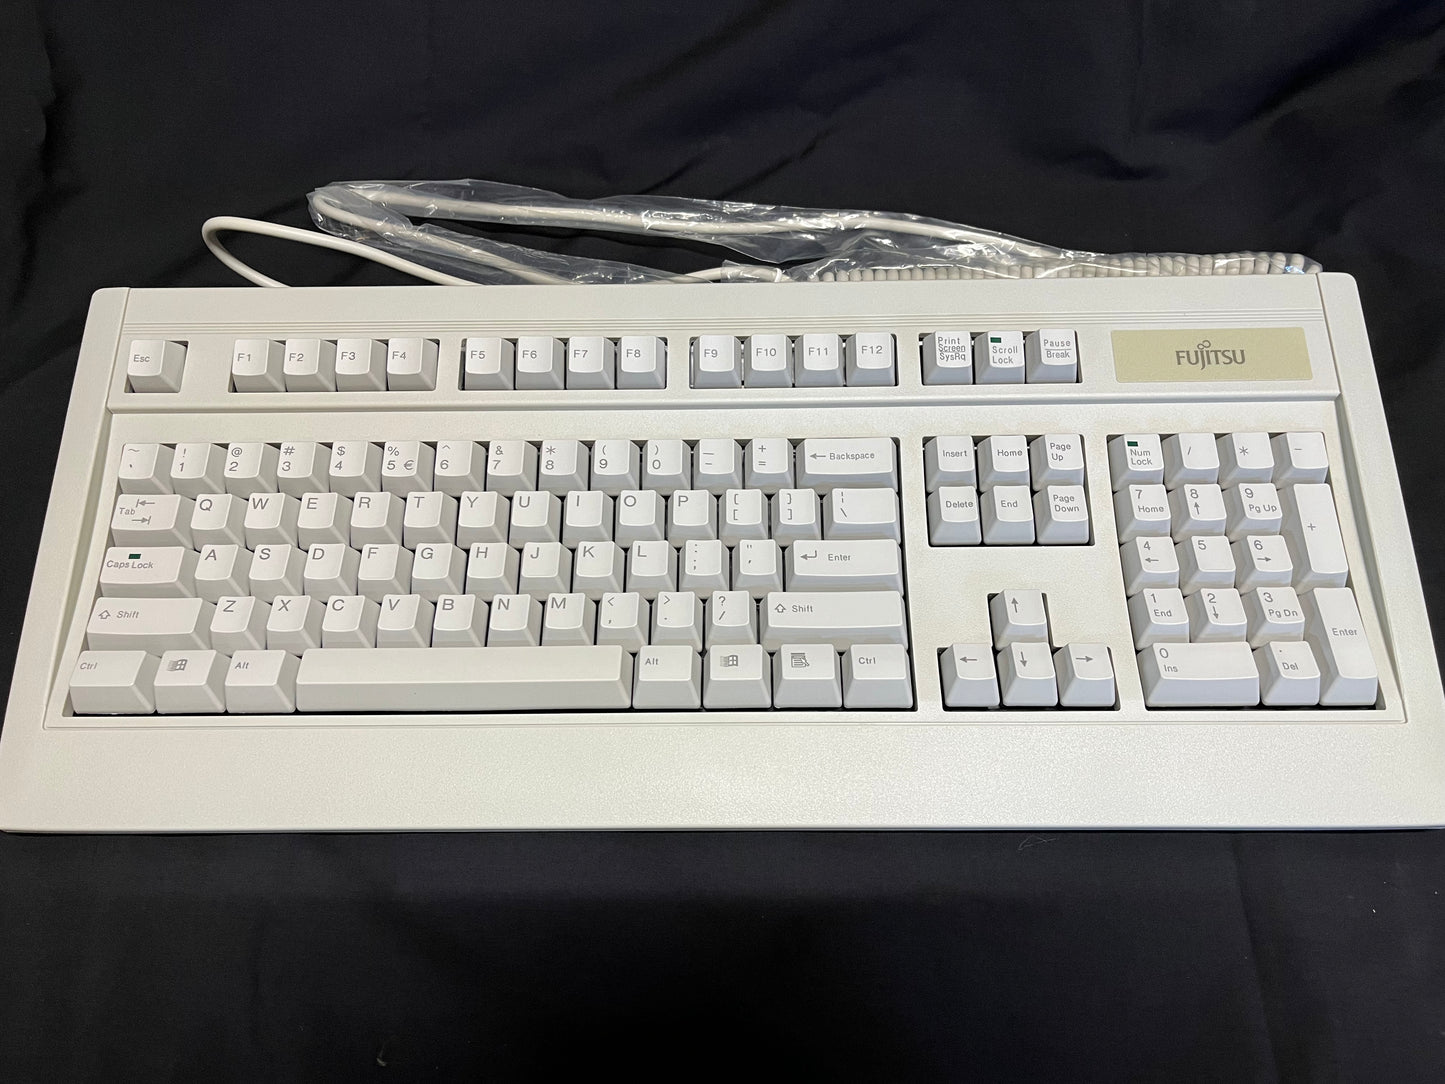 FKB4726-651, Fujitsu FKB4725 Series Full Size Mechanical Click PS2 Keyboard